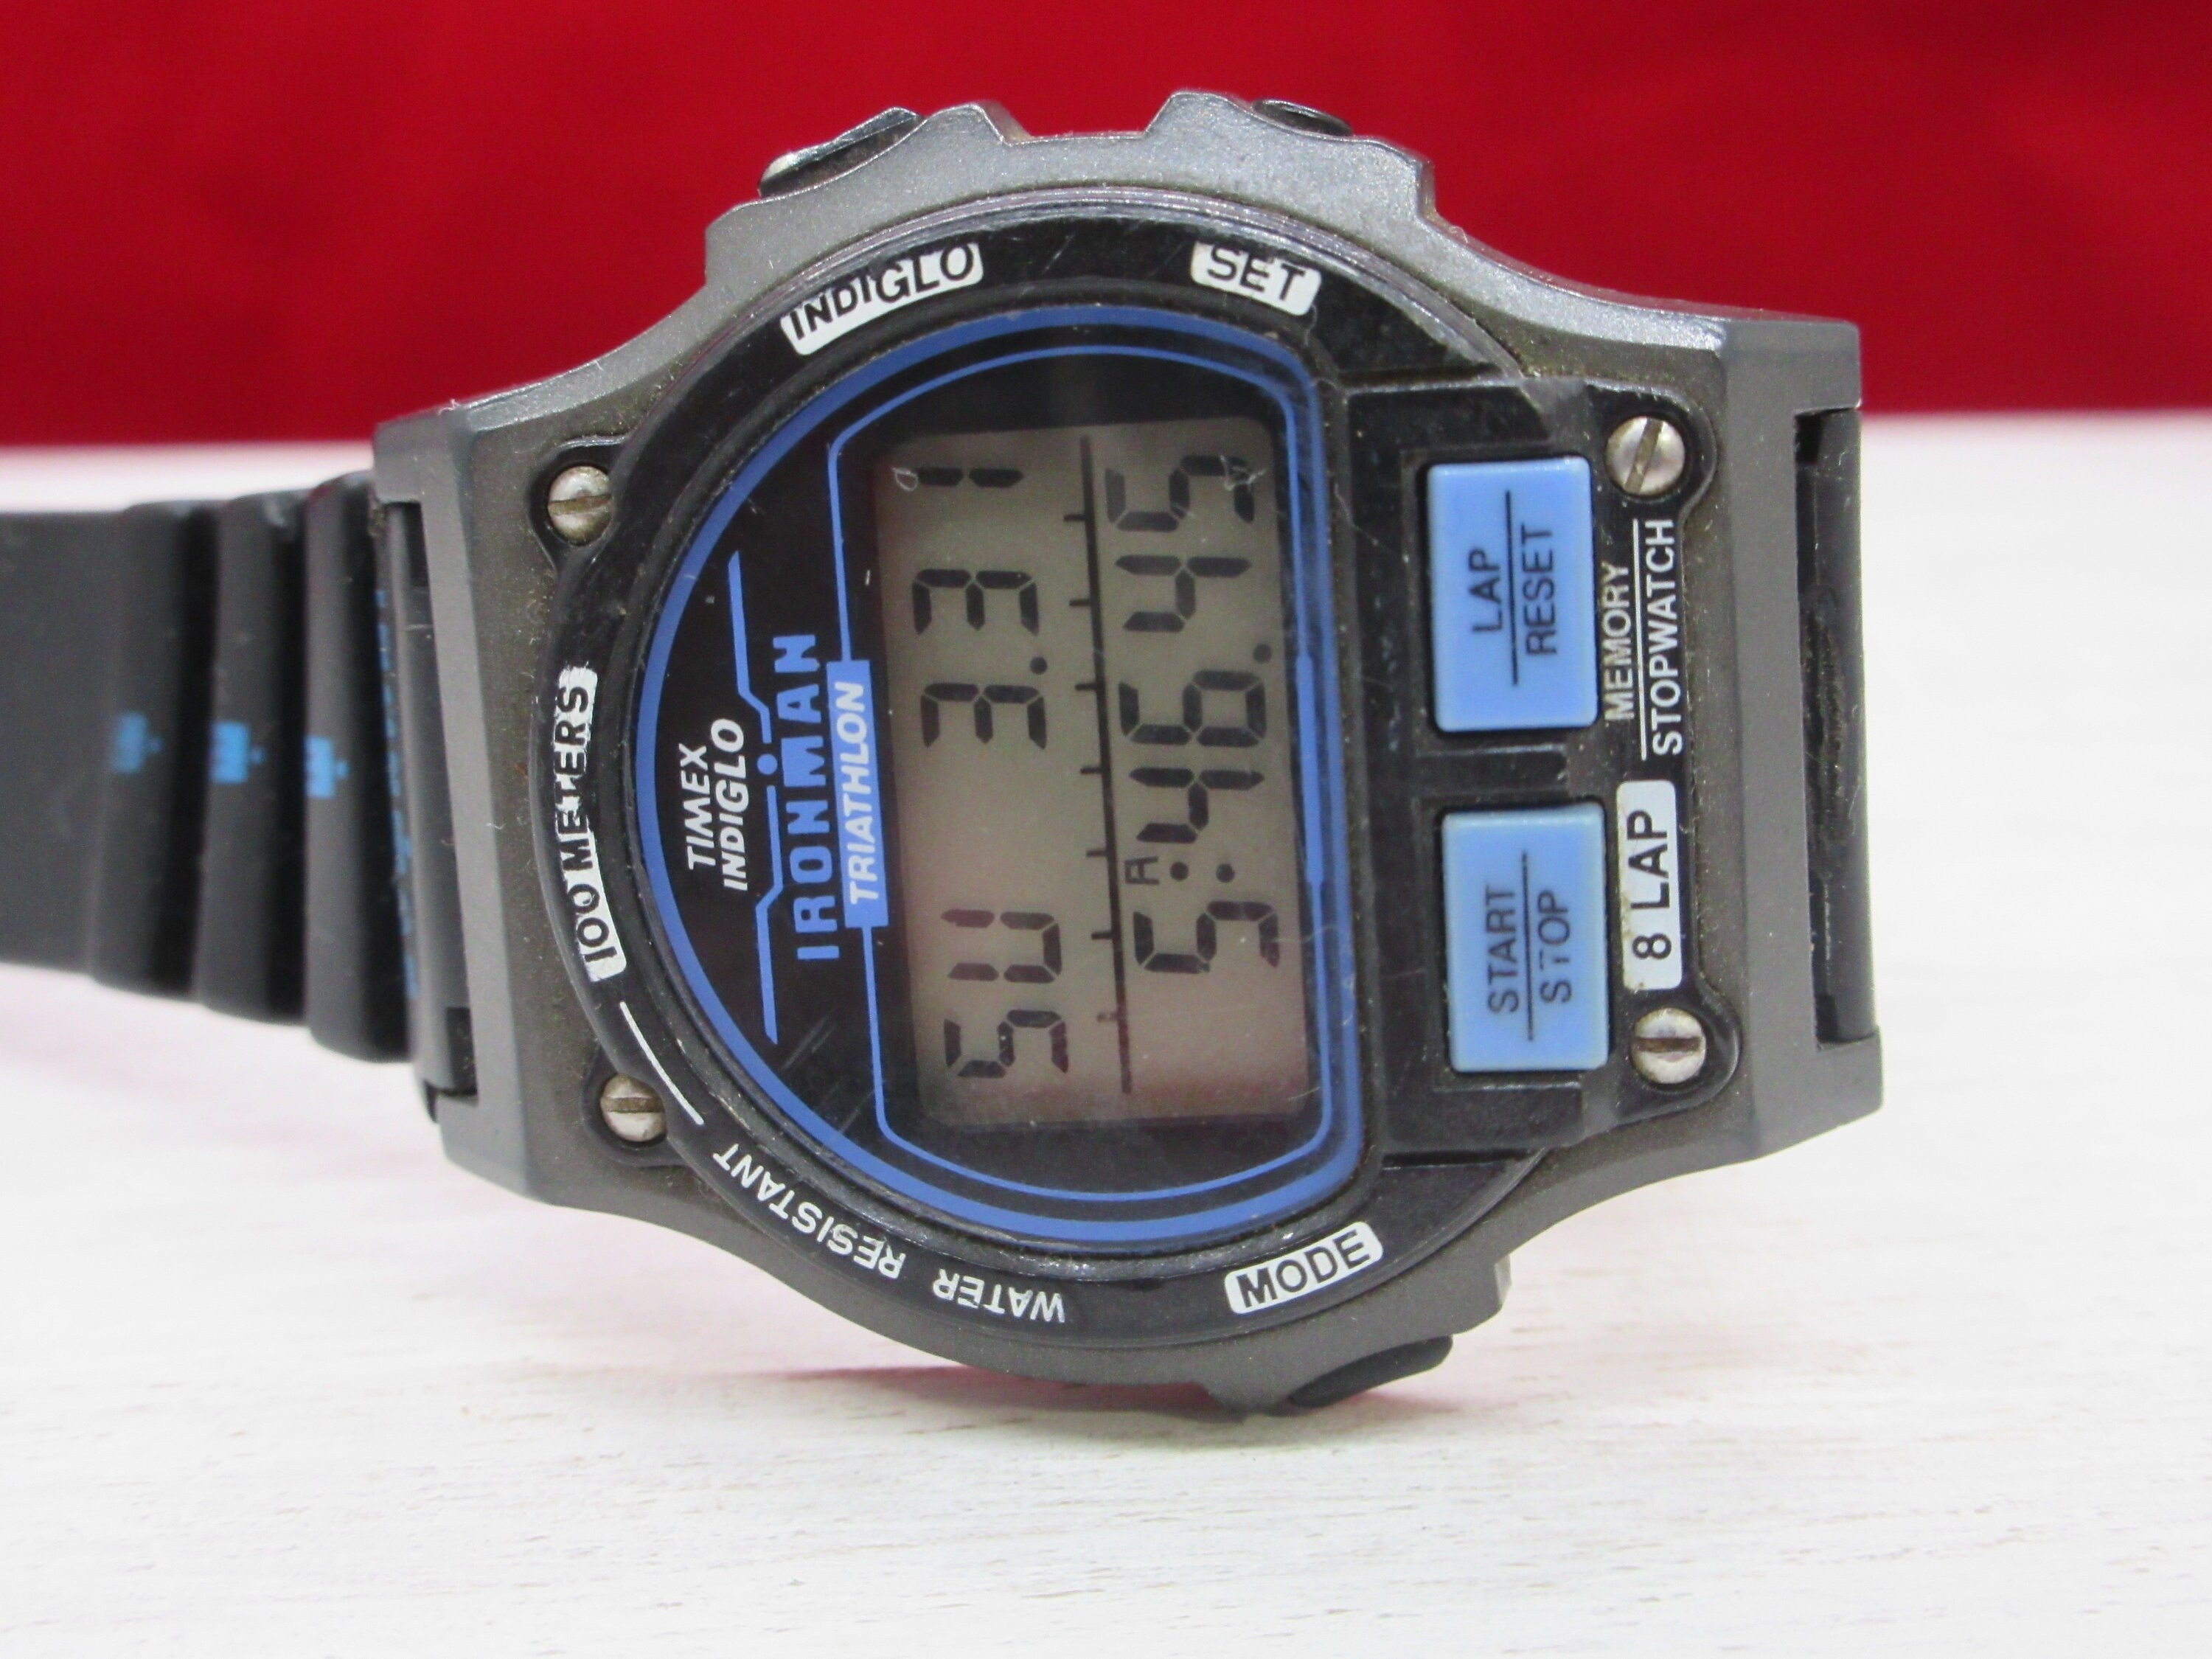 Vintage Timex Ironman Triathlon Wrist Watch Indiglo 90's - Etsy